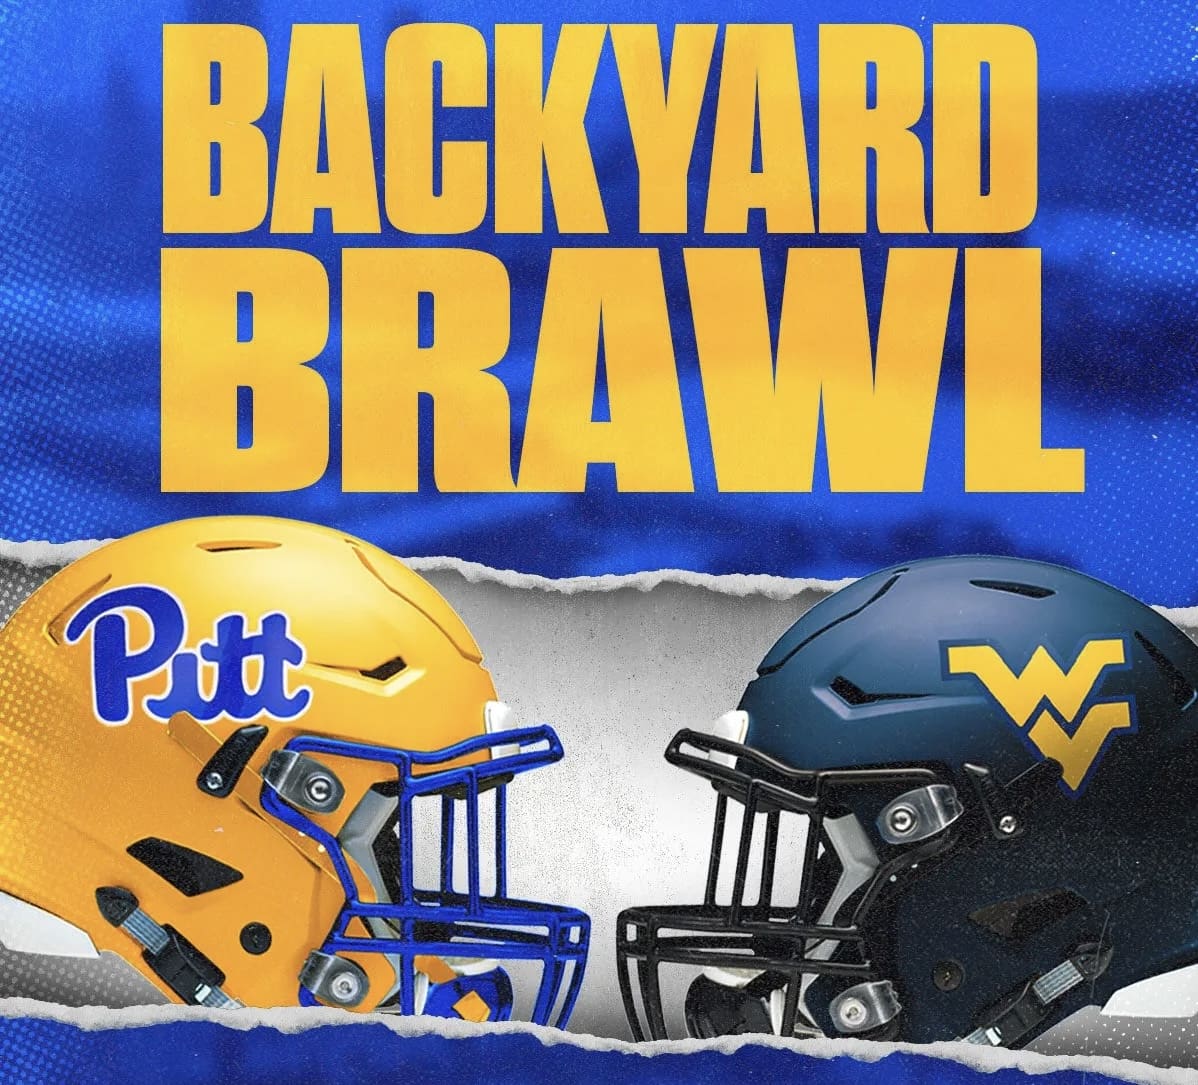 West Virginia Pitt Backyard Brawl